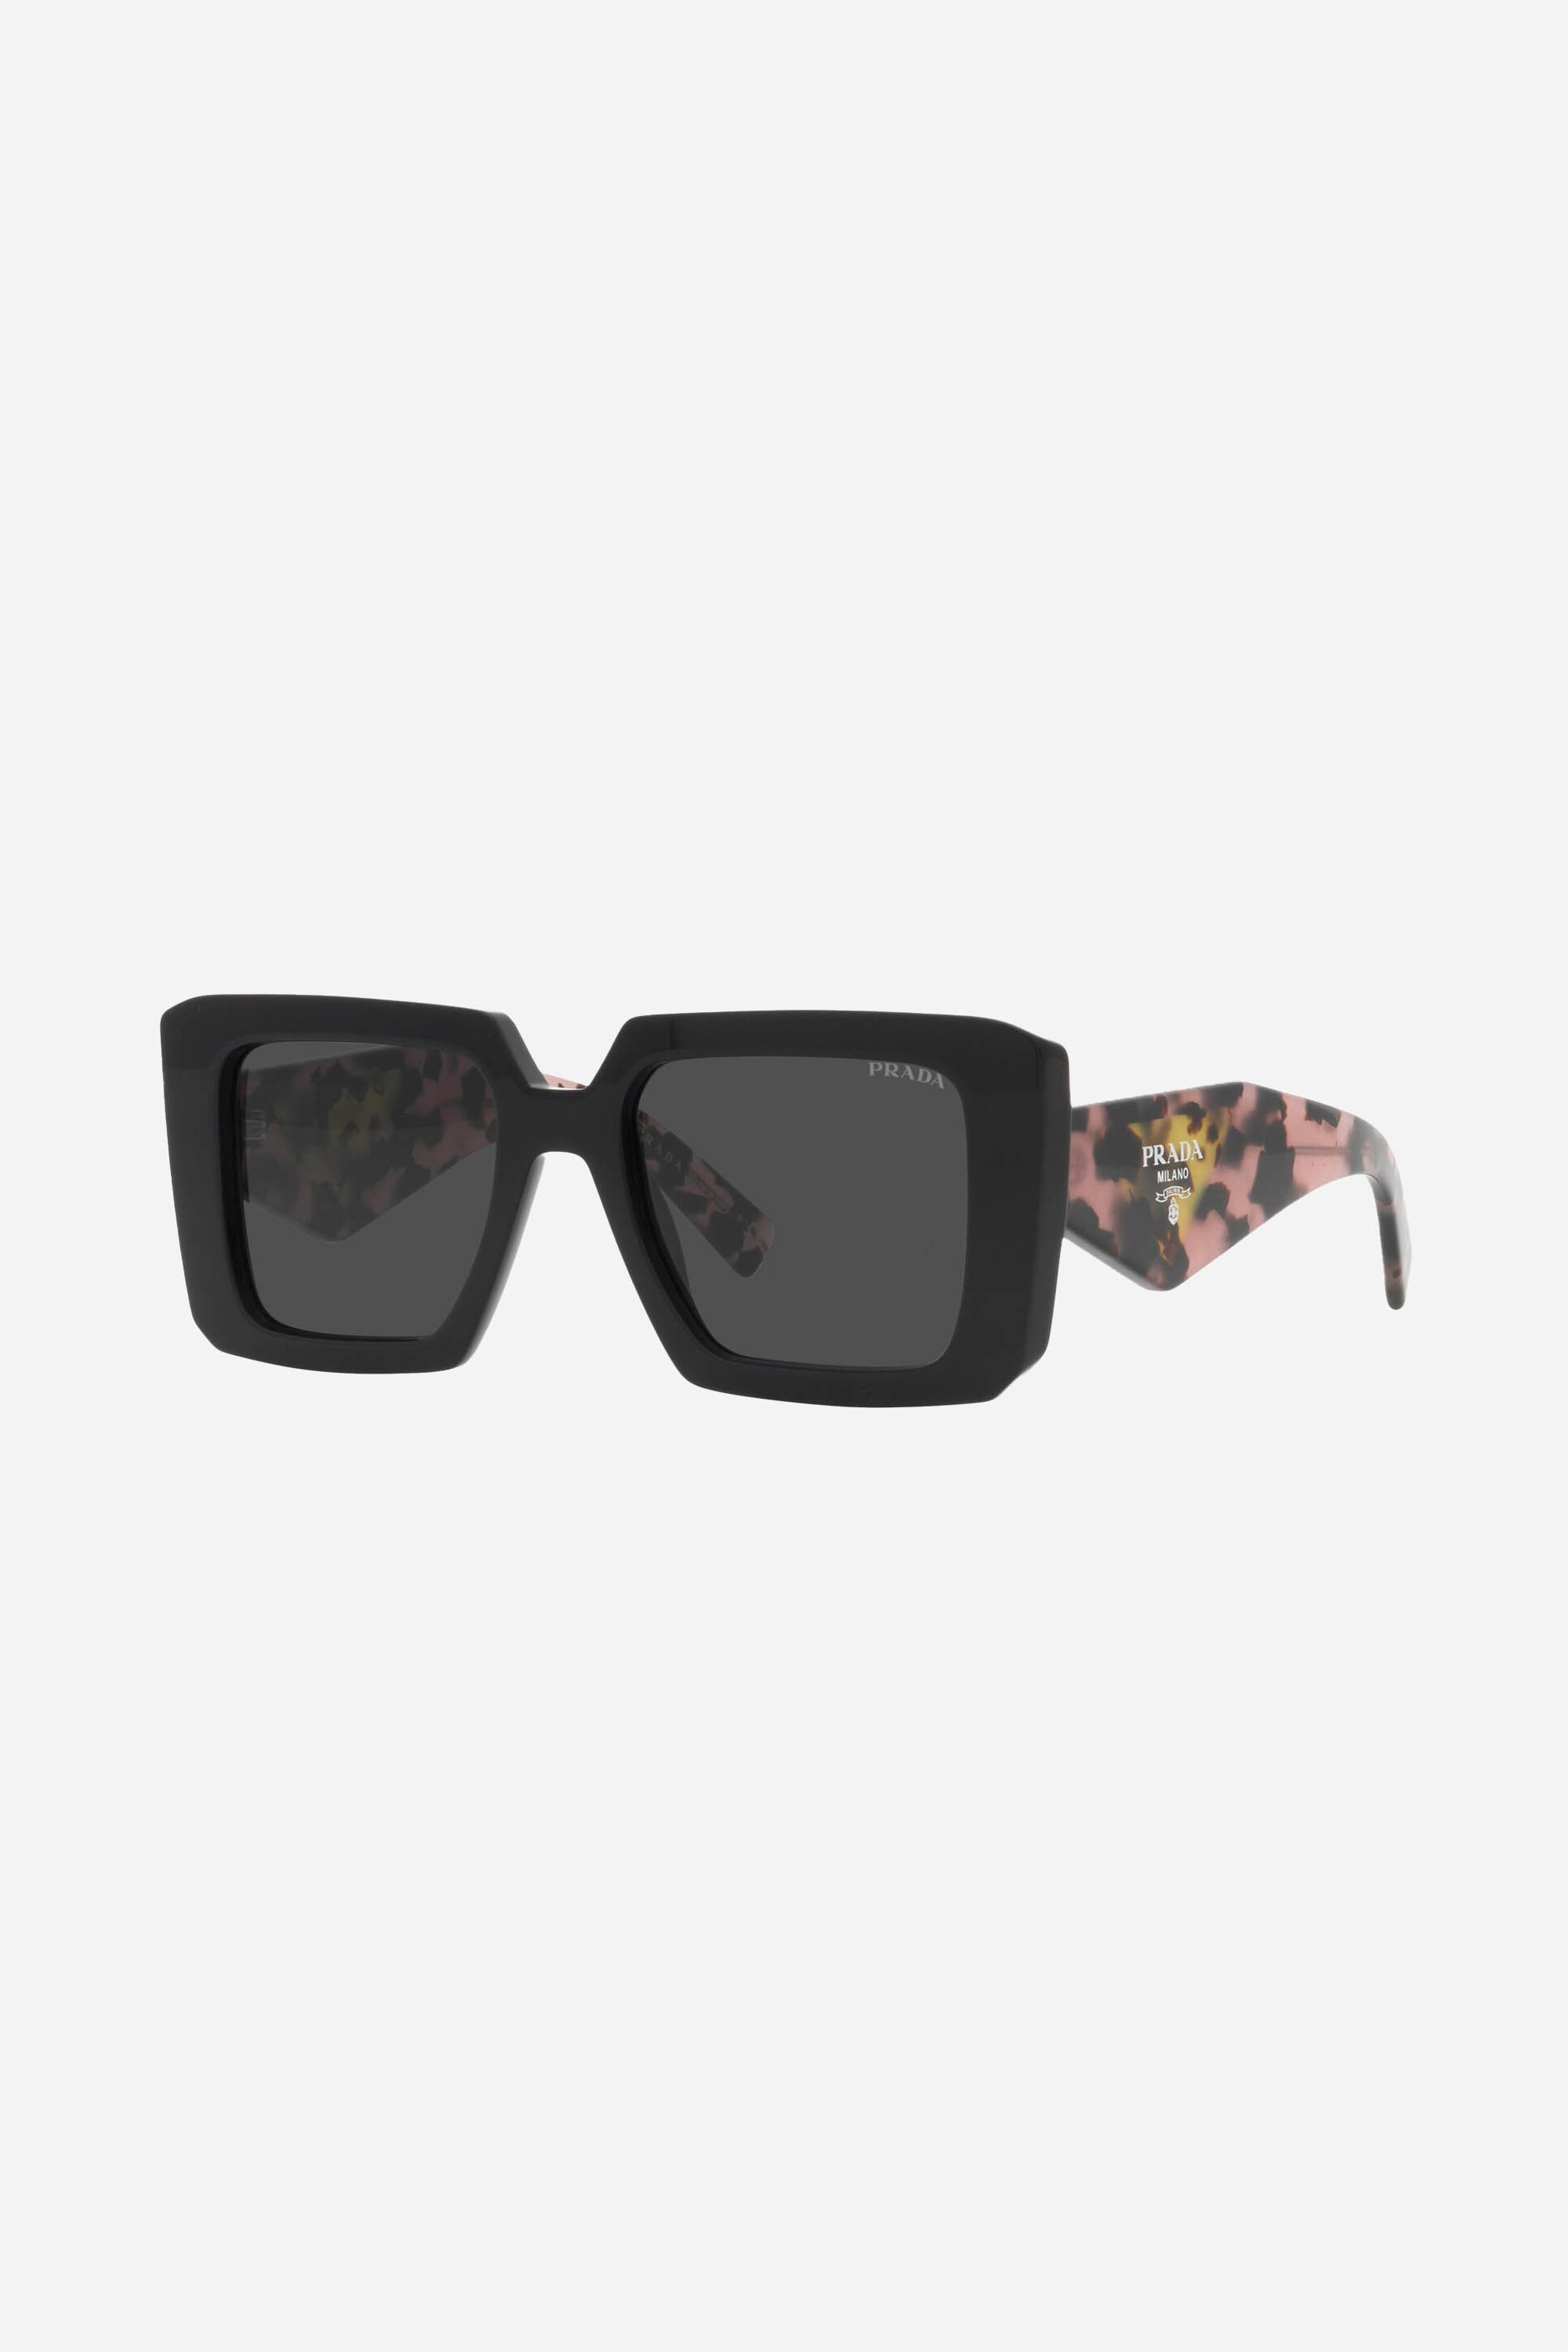 Prada squared sunglasses featuring the signature logo triangle - Eyewear Club